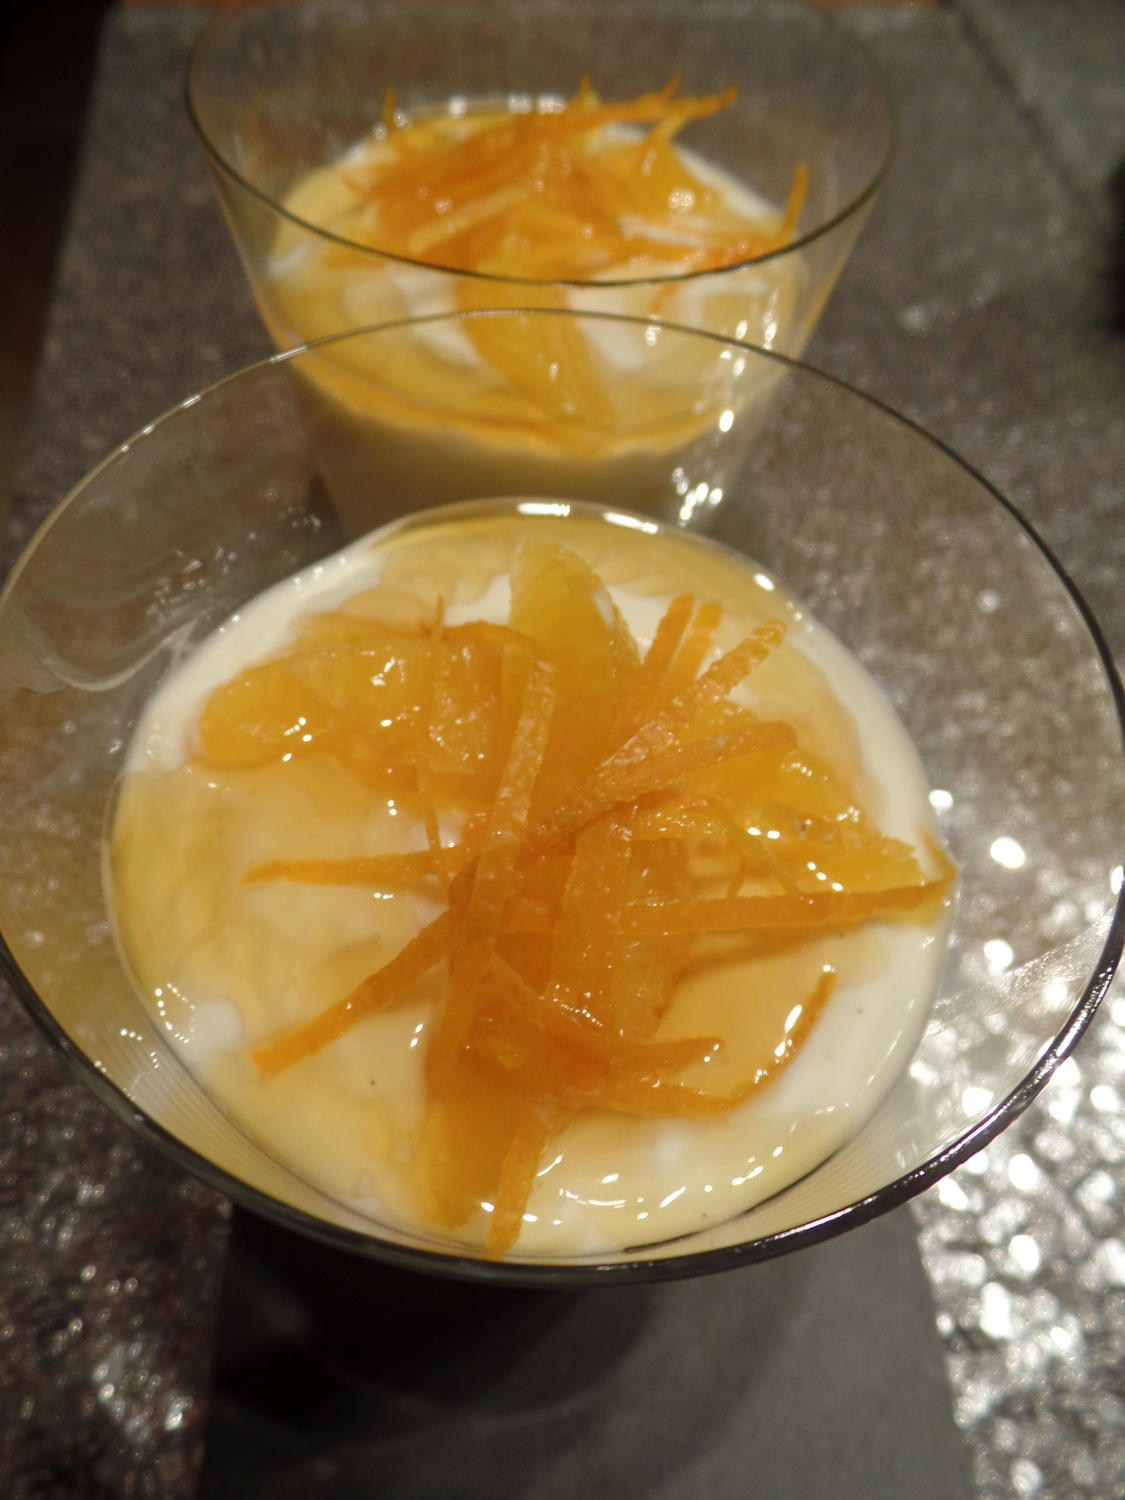 Orangen-Joghurt mit Honig - Rezept mit Bild - kochbar.de